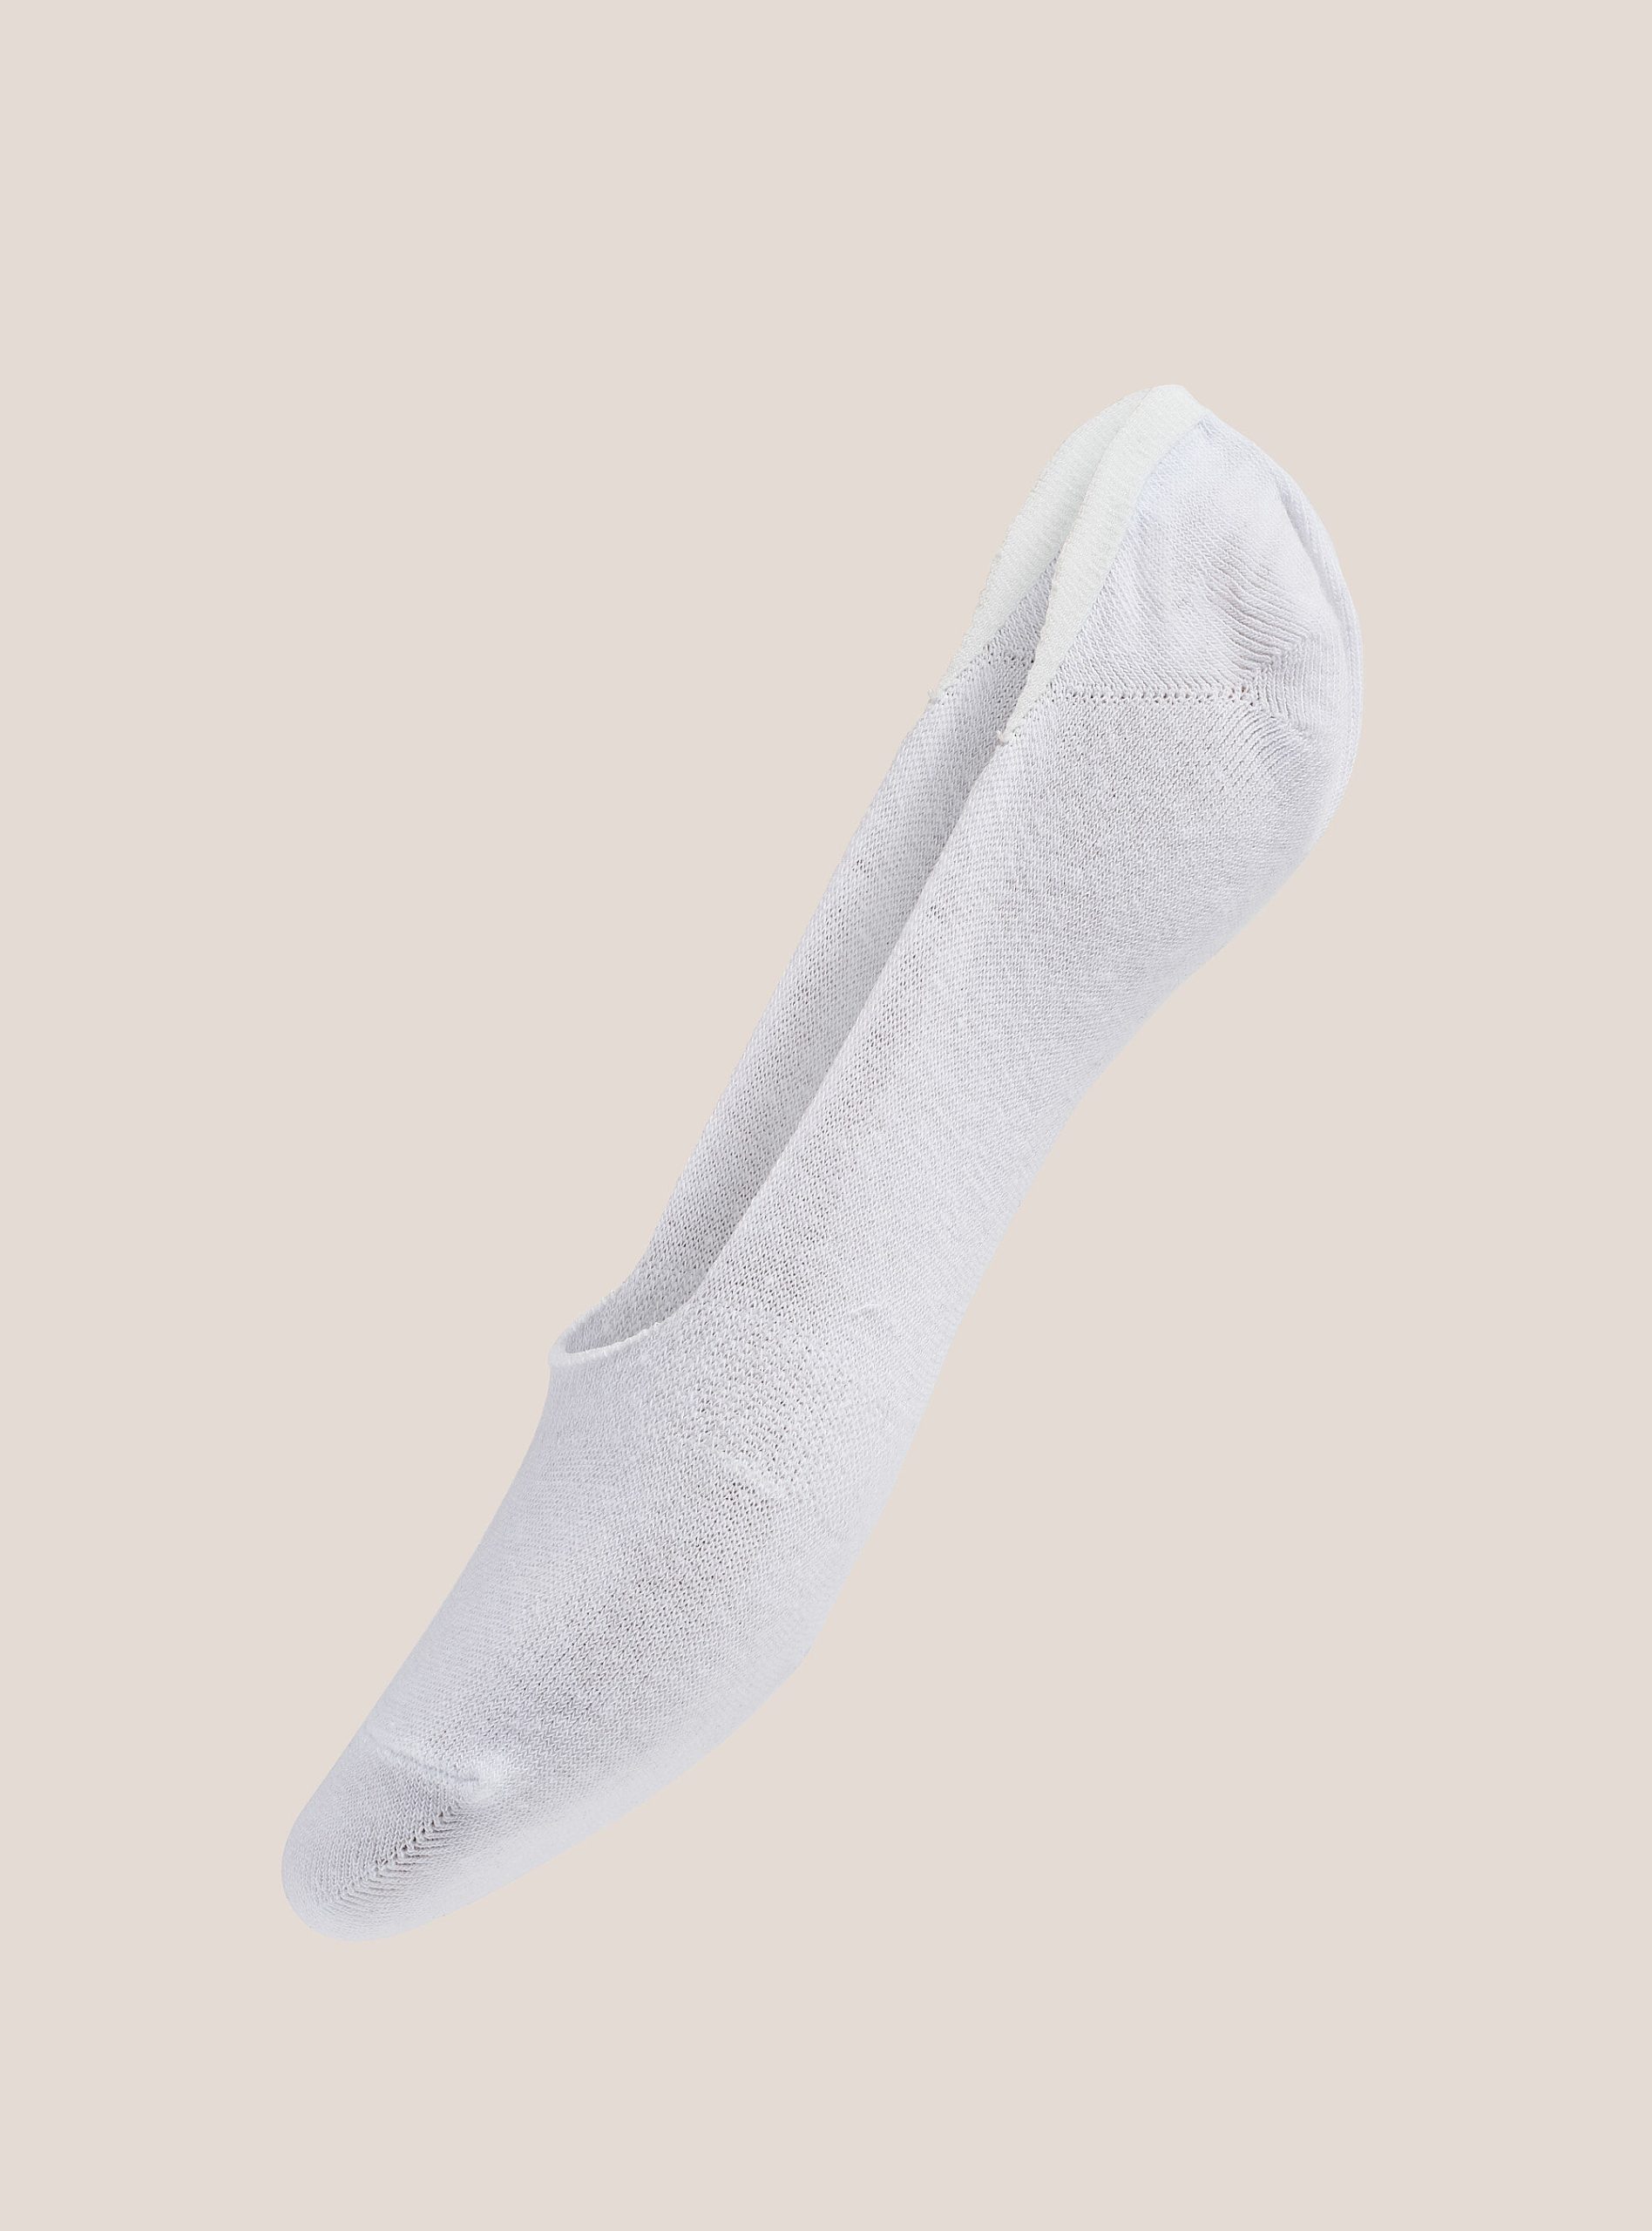 Set 3 Pairs Of Footsies Socks Verbraucher Alcott Socken Frauen C099 White – 1